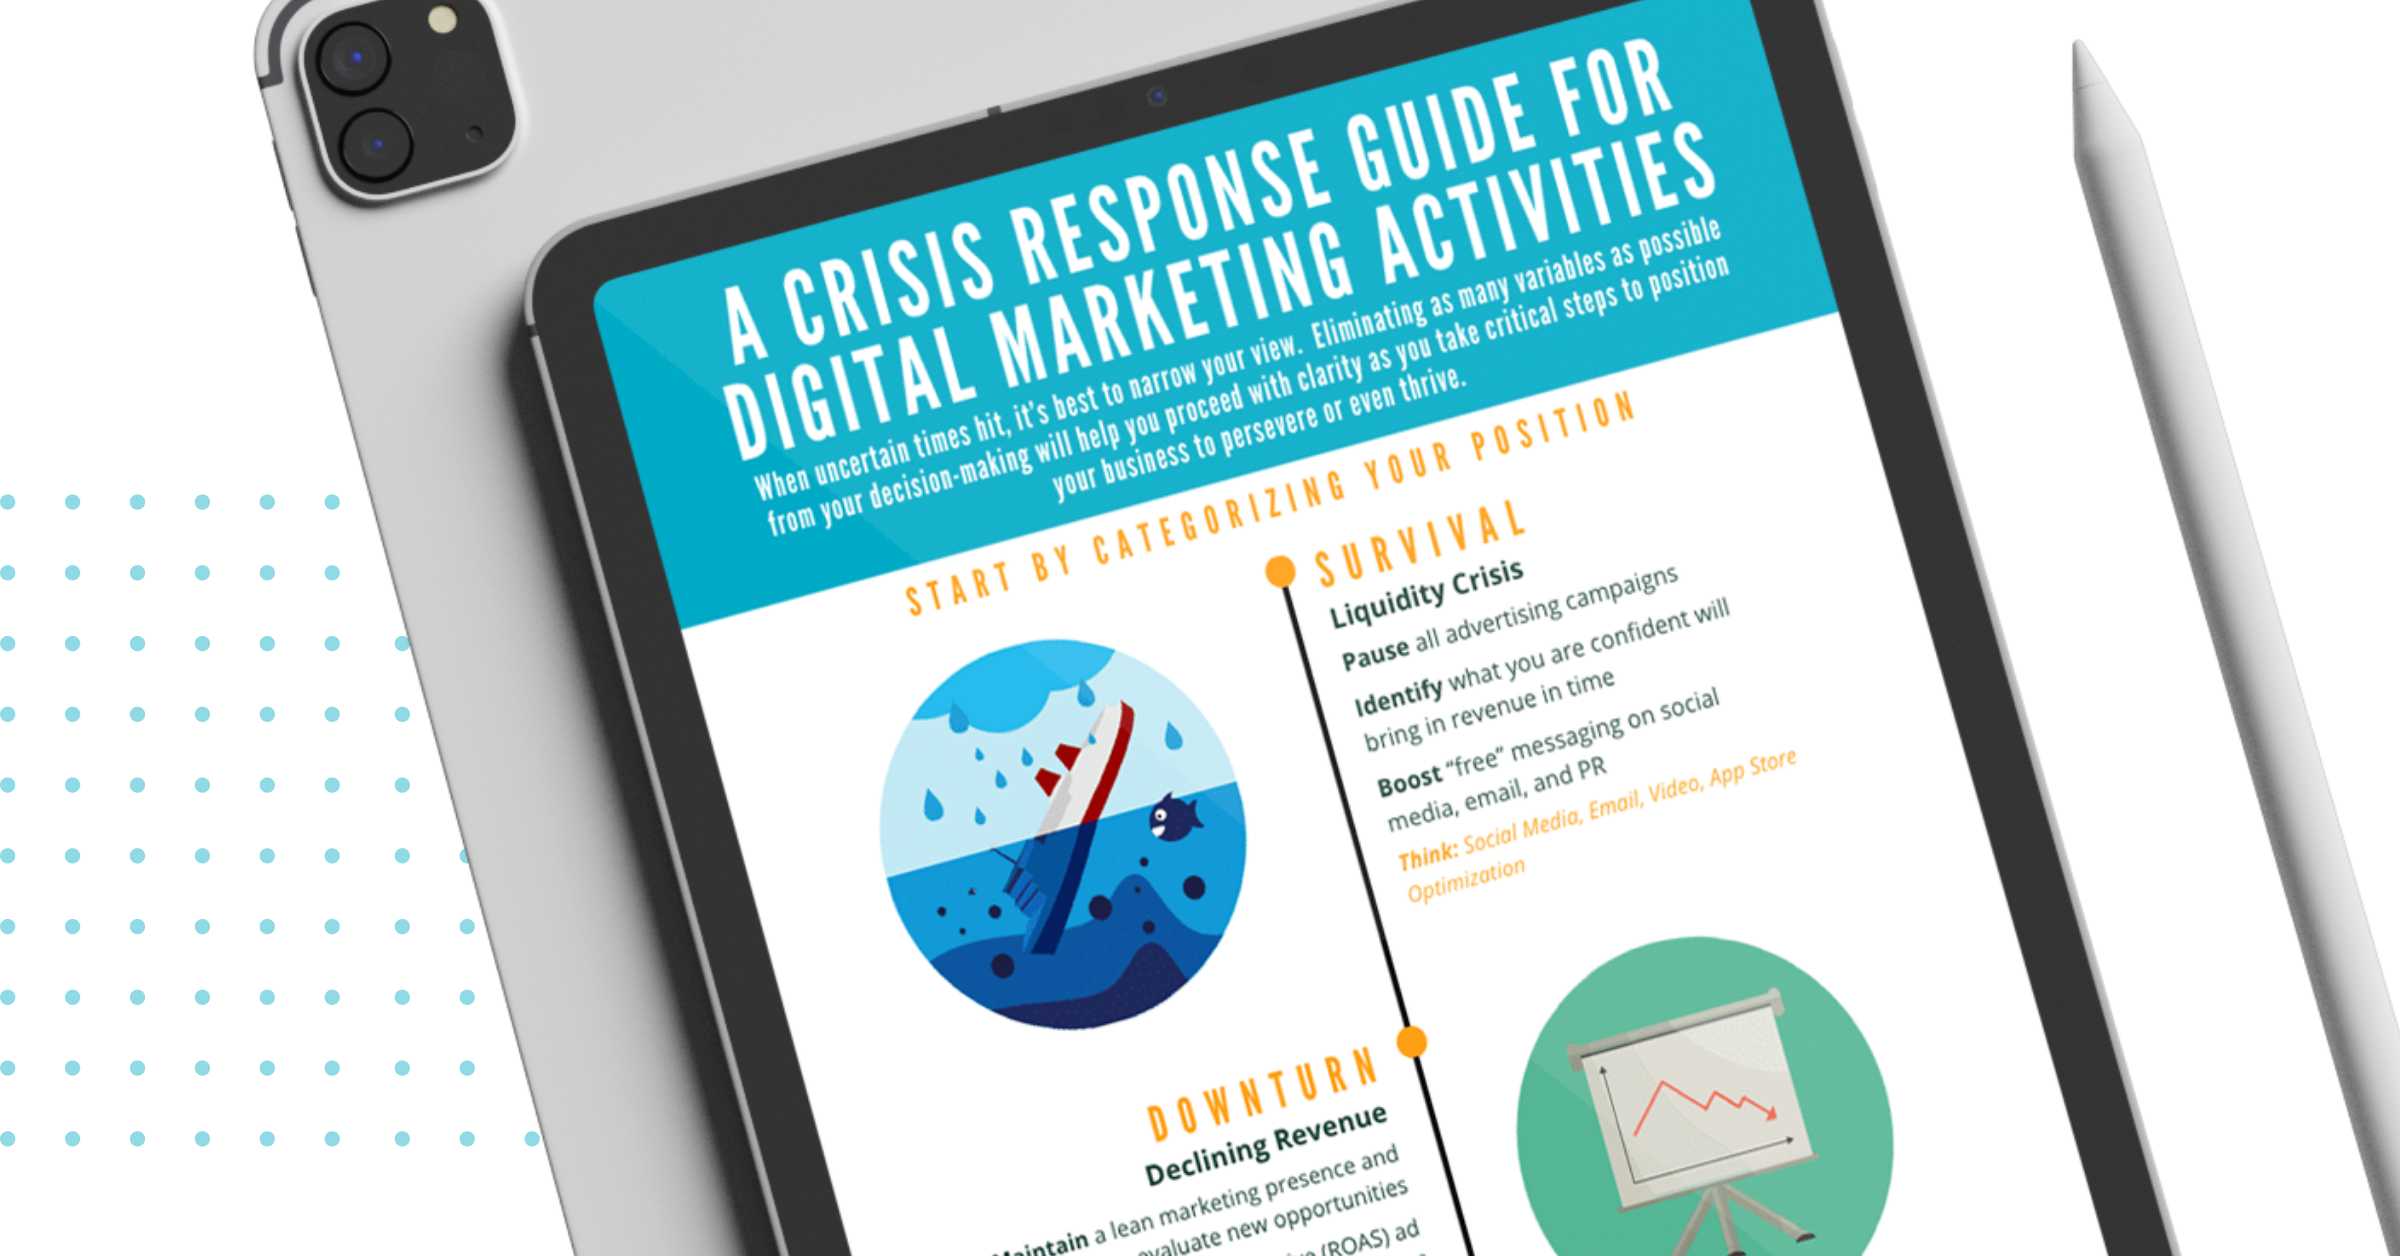 crisis response guide for digital marketing activities